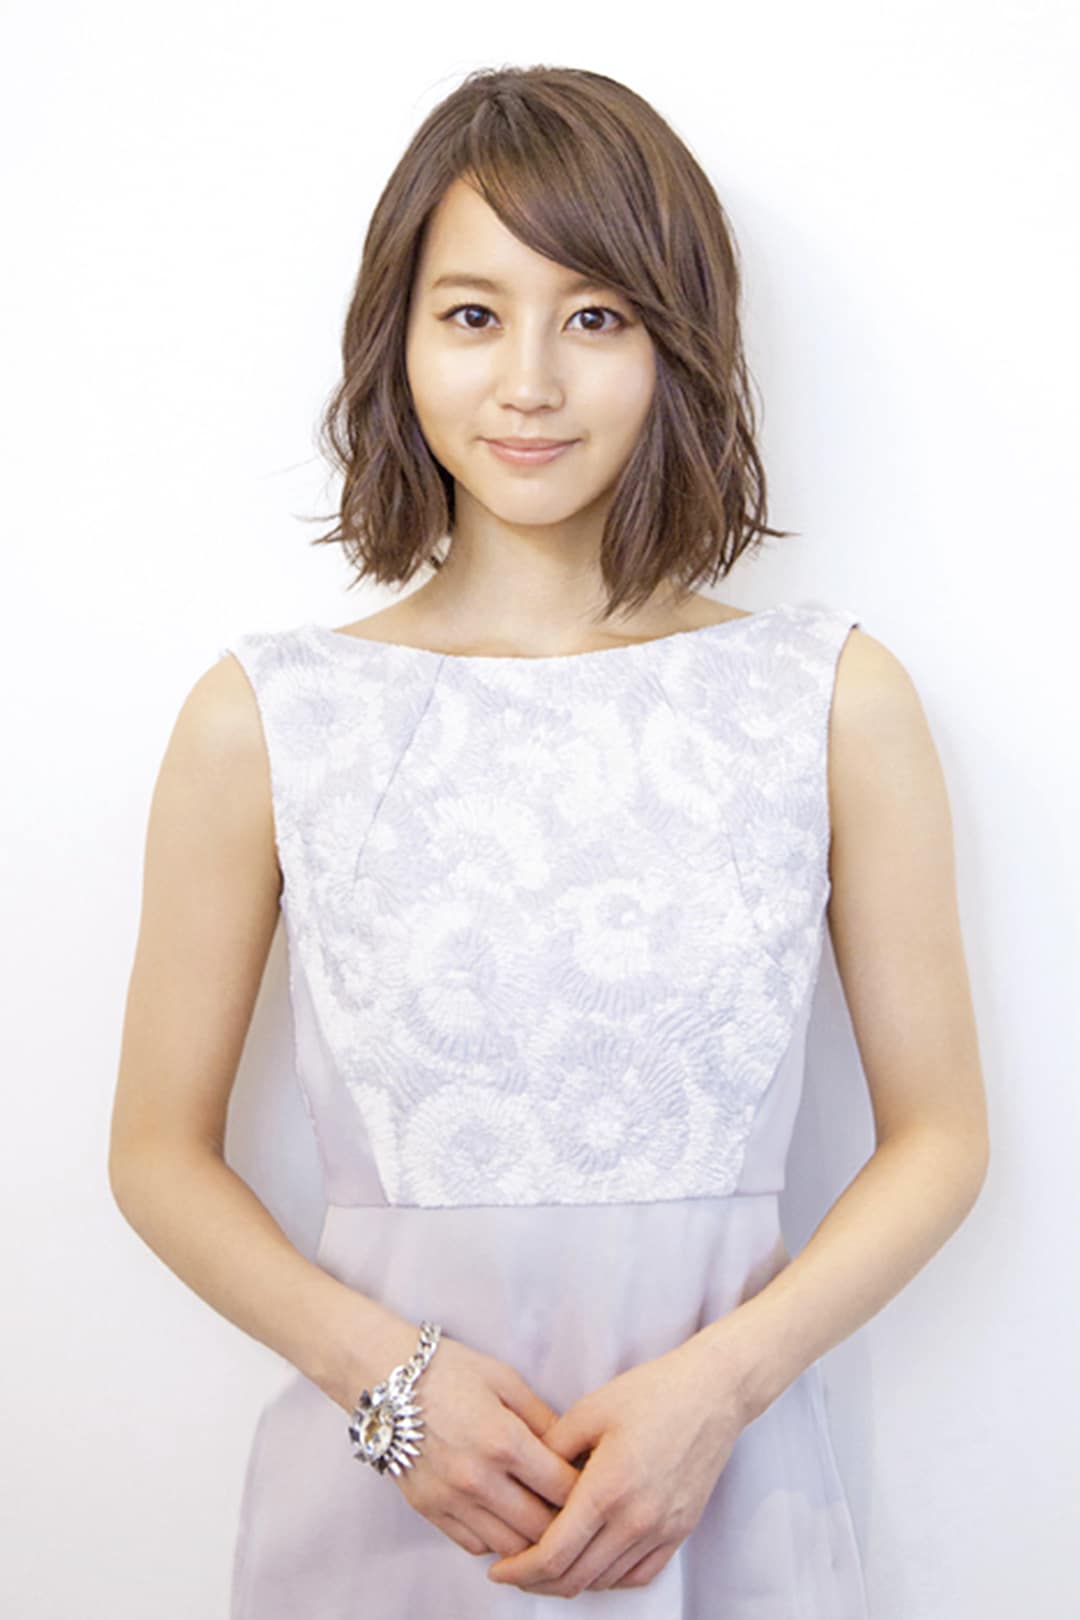 Maki Horikita Japanese Actress